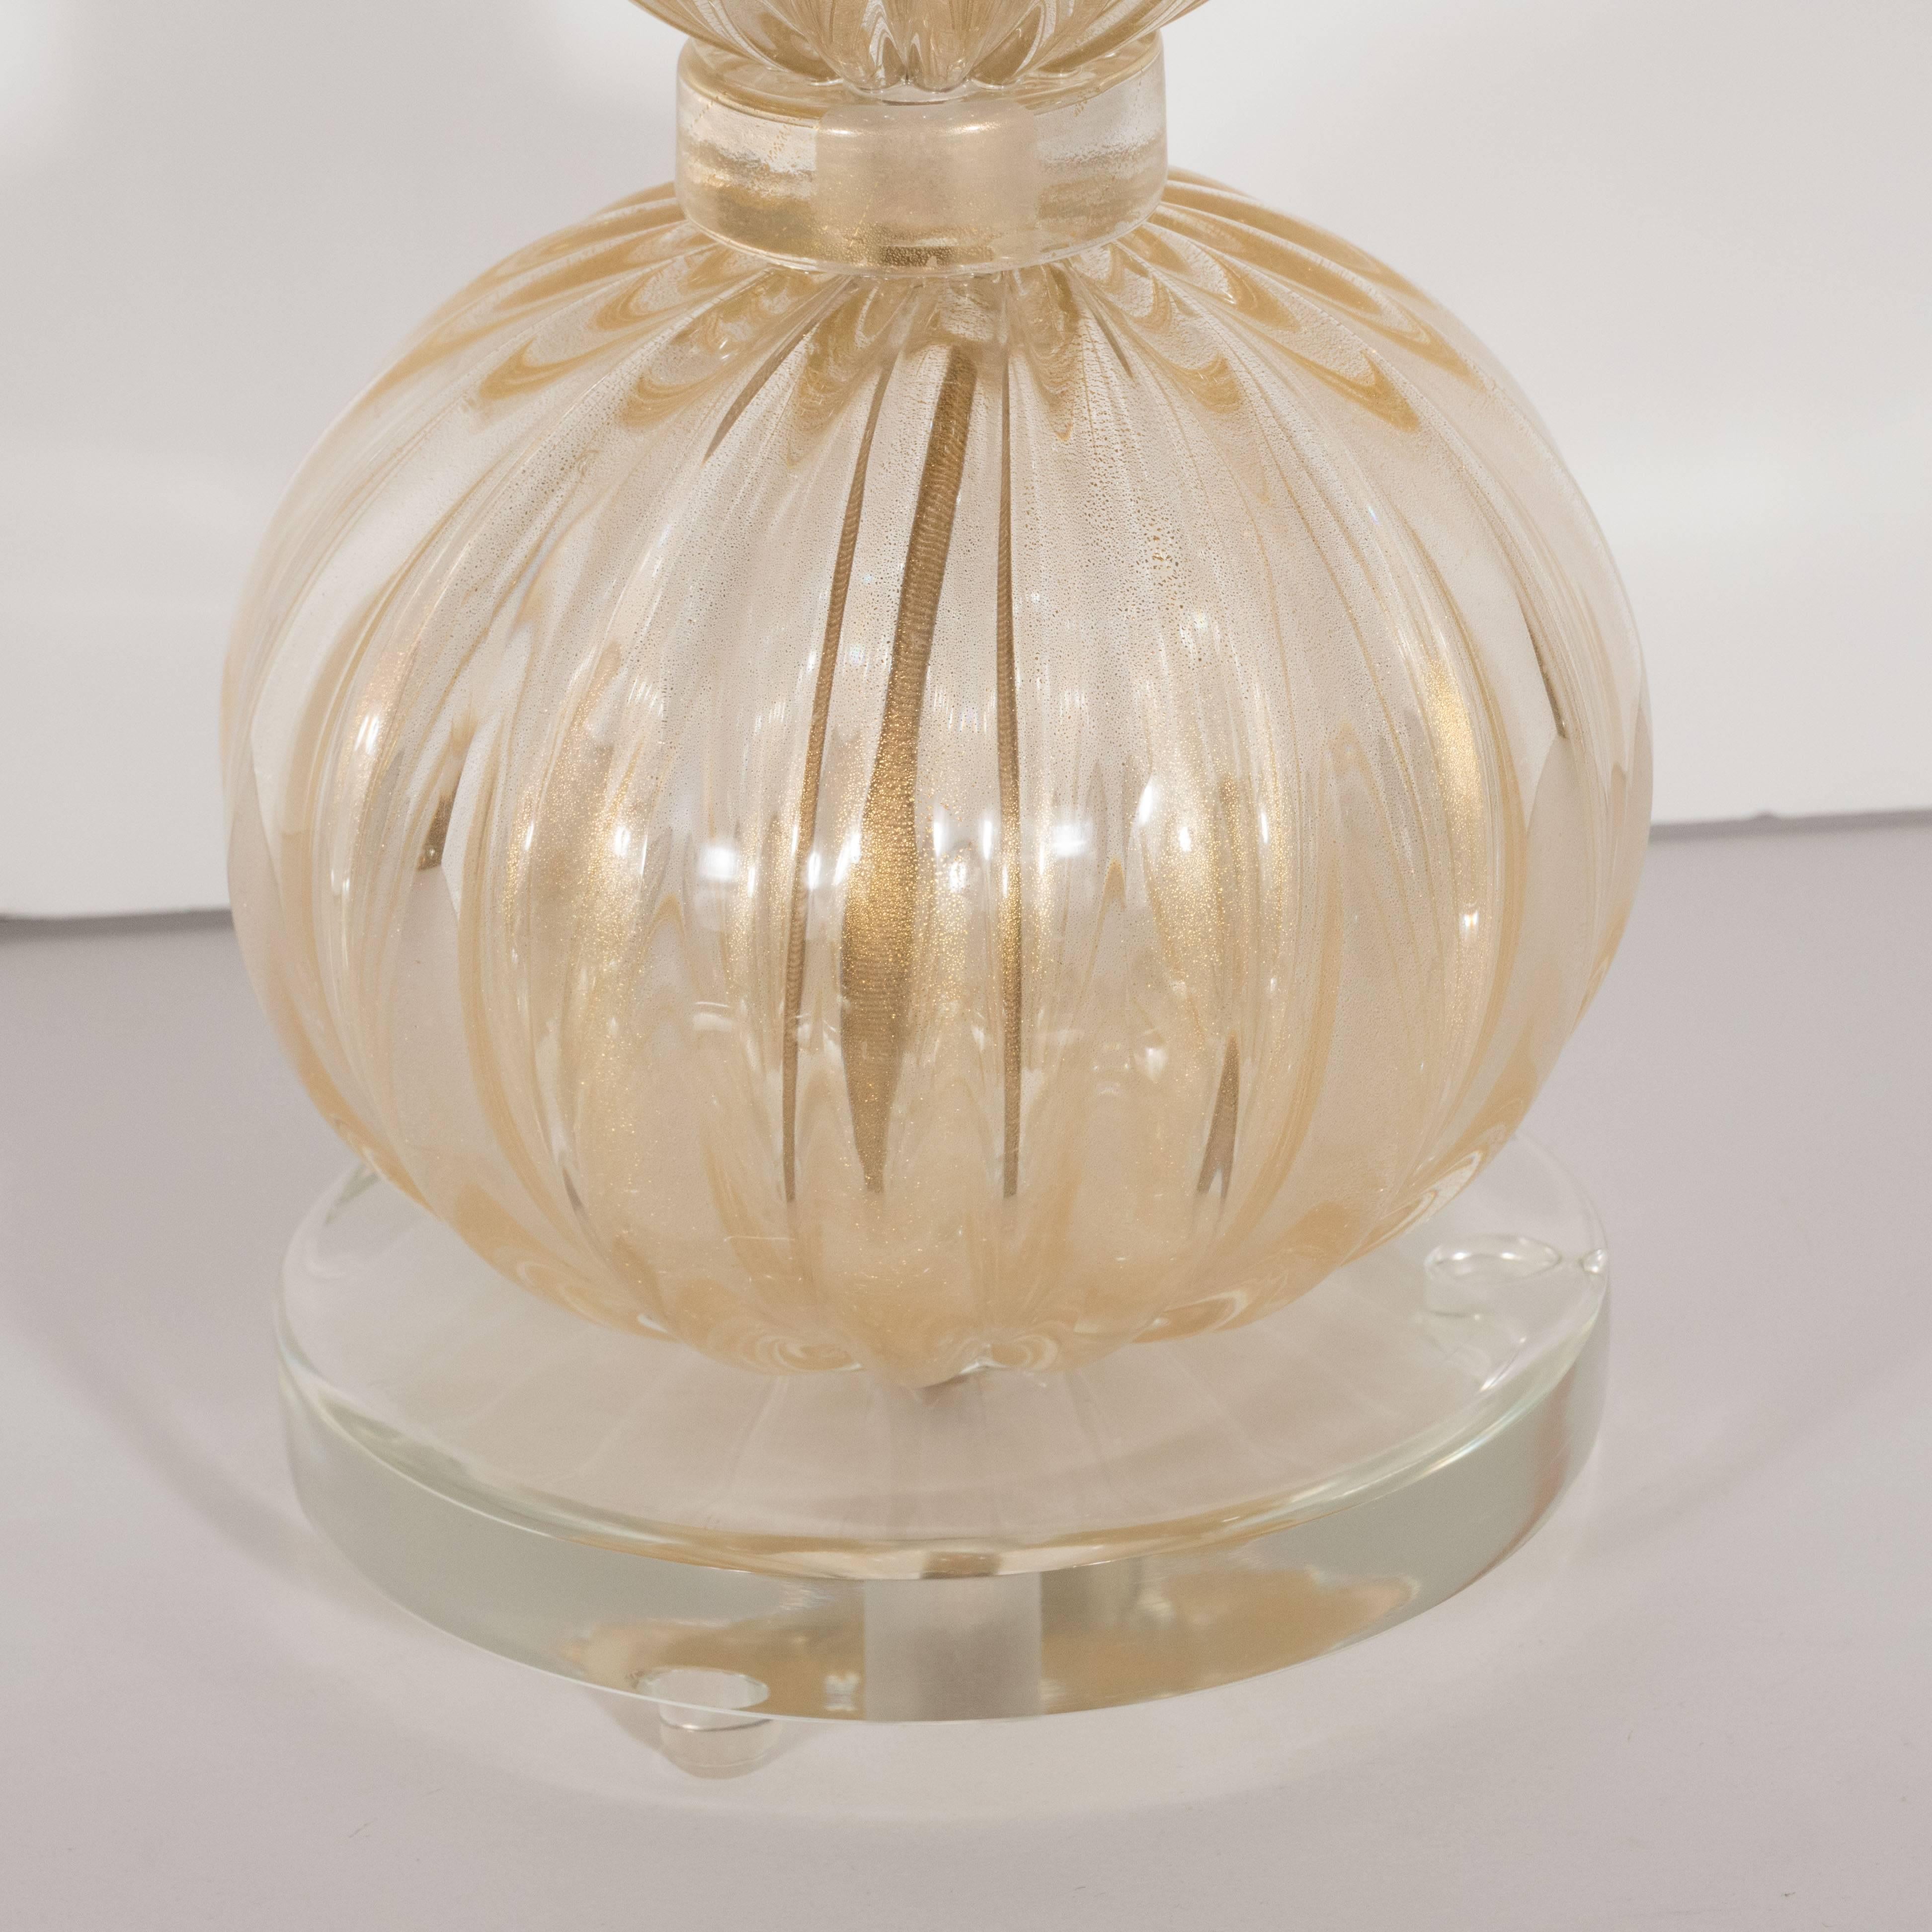 Pair of Modernist Handblown Murano Glass Table Lamps with 24-Karat Gold Flecks 1